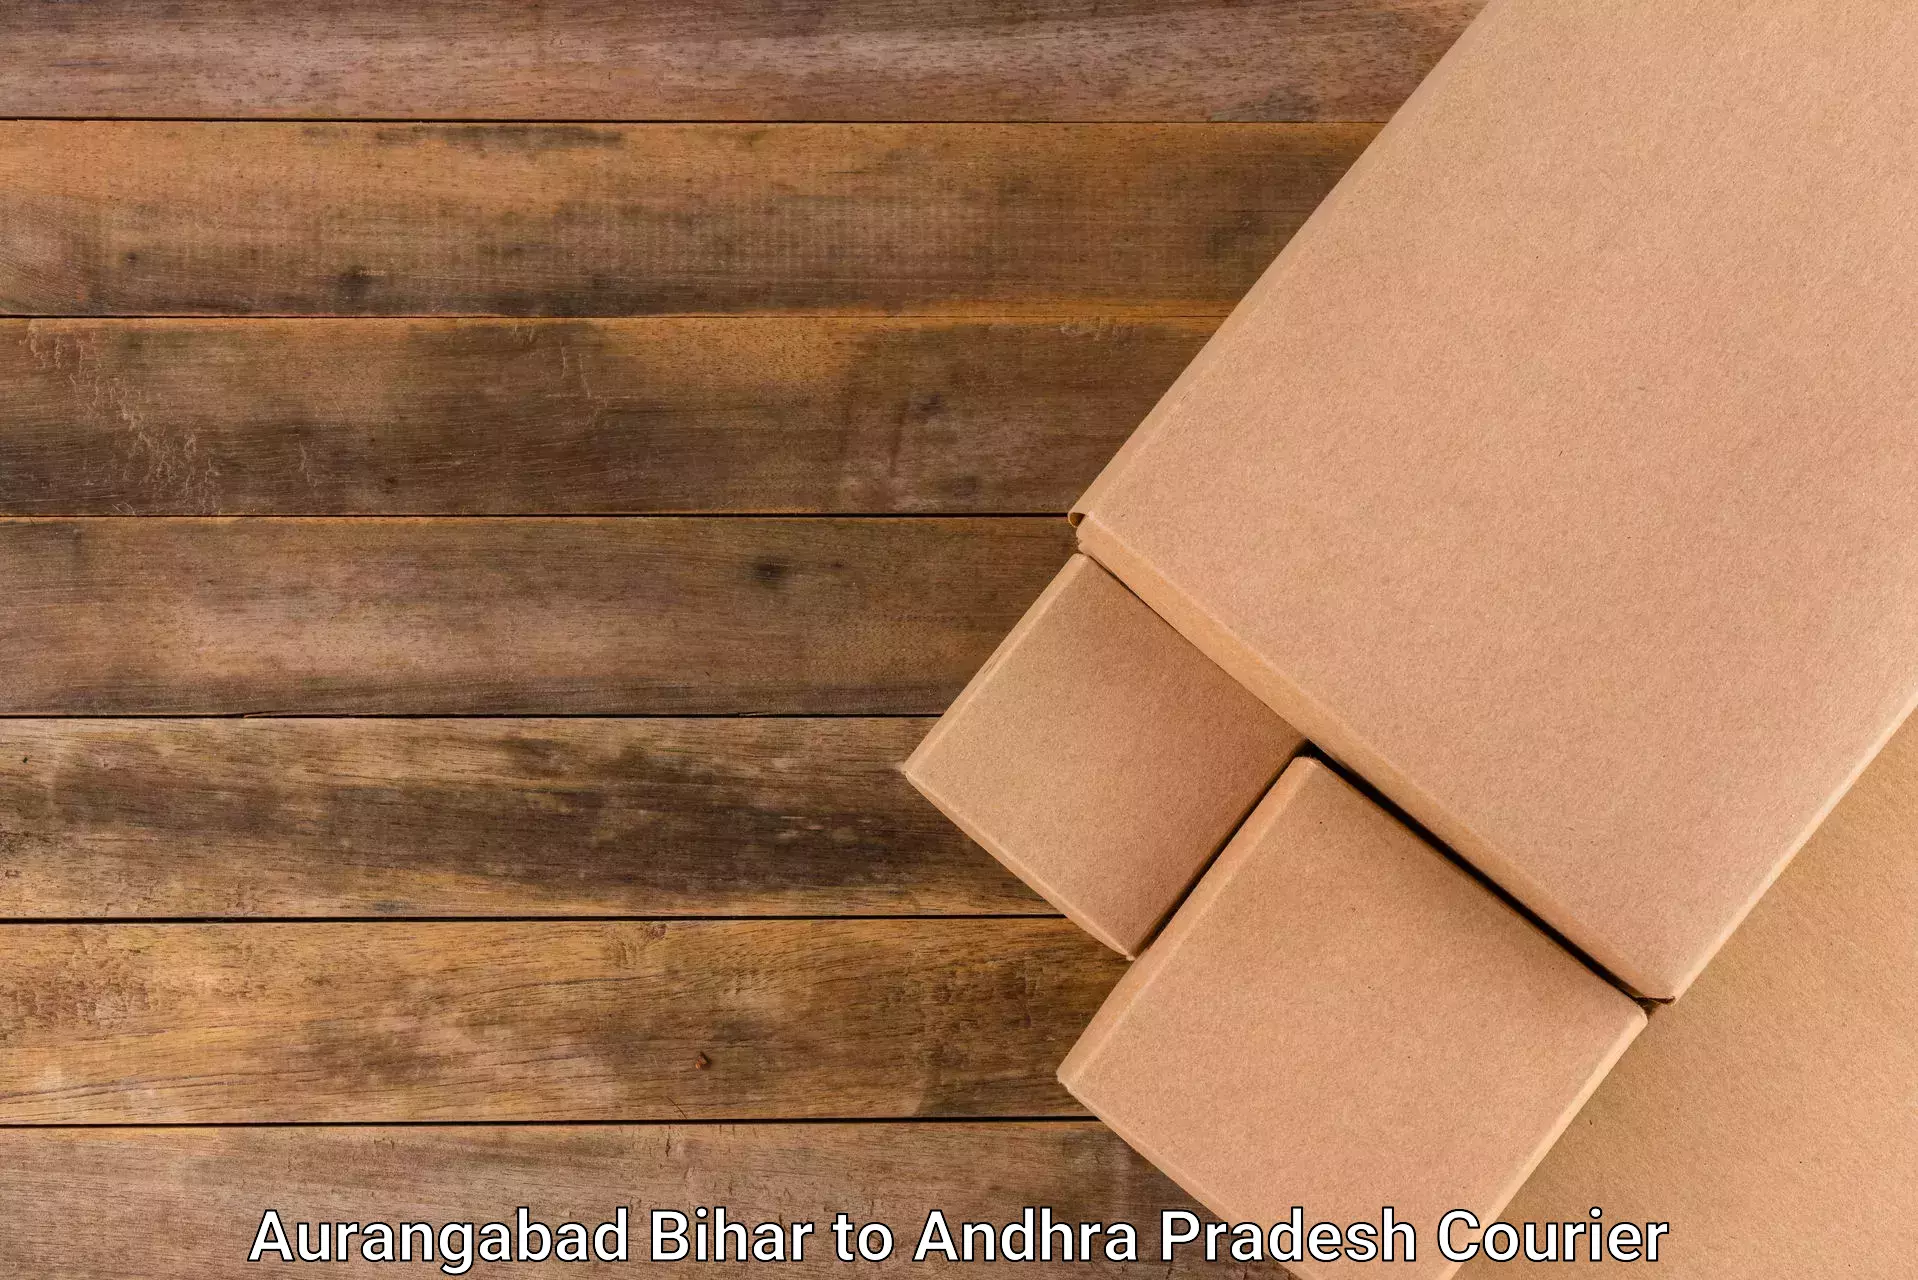 Premium courier services Aurangabad Bihar to Anakapalli